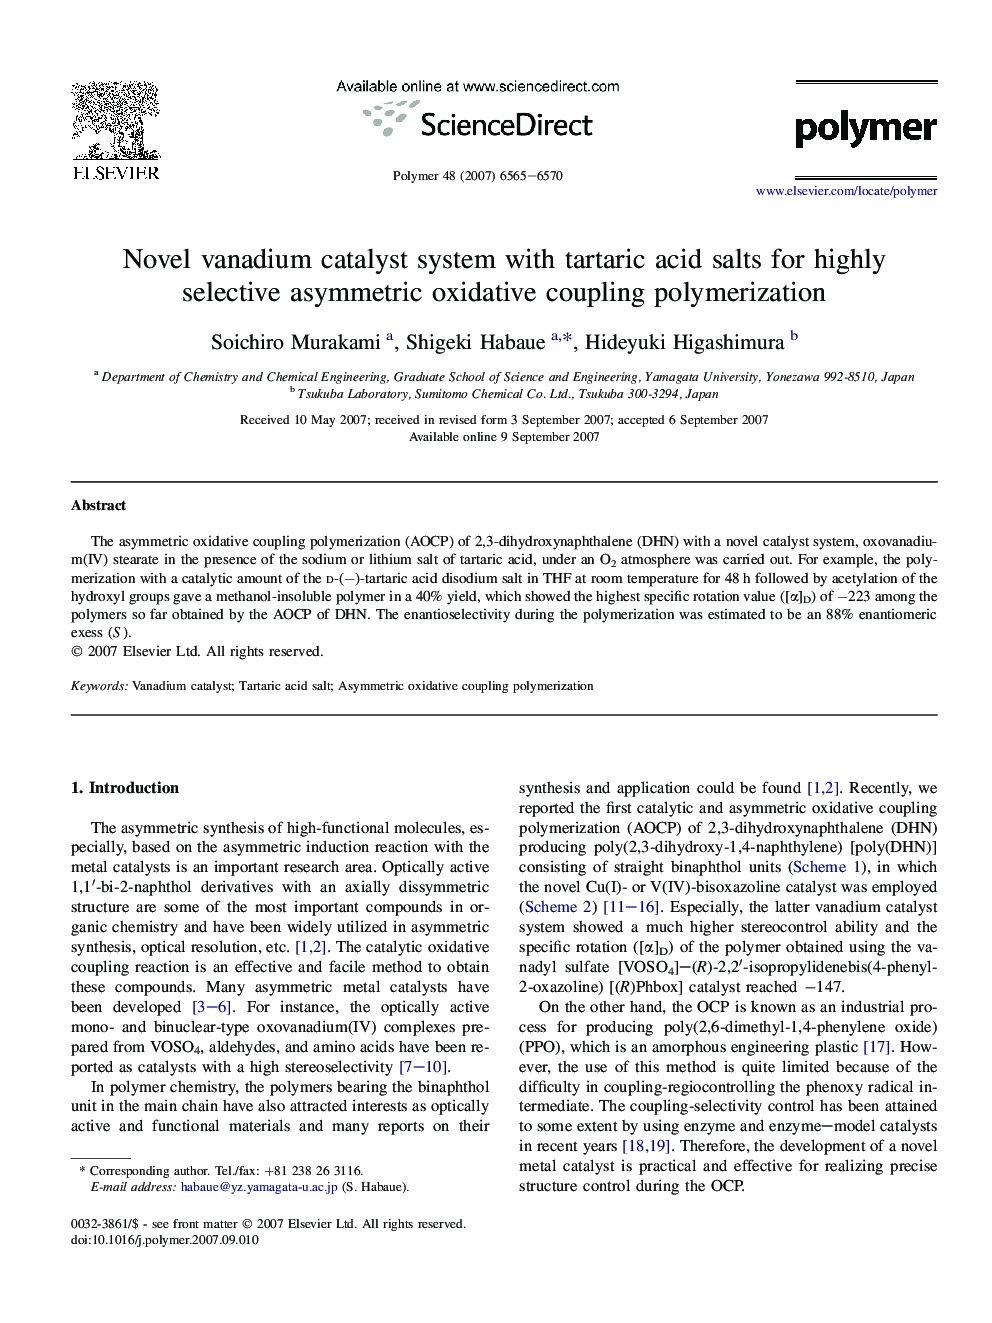 Novel vanadium catalyst system with tartaric acid salts for highly selective asymmetric oxidative coupling polymerization